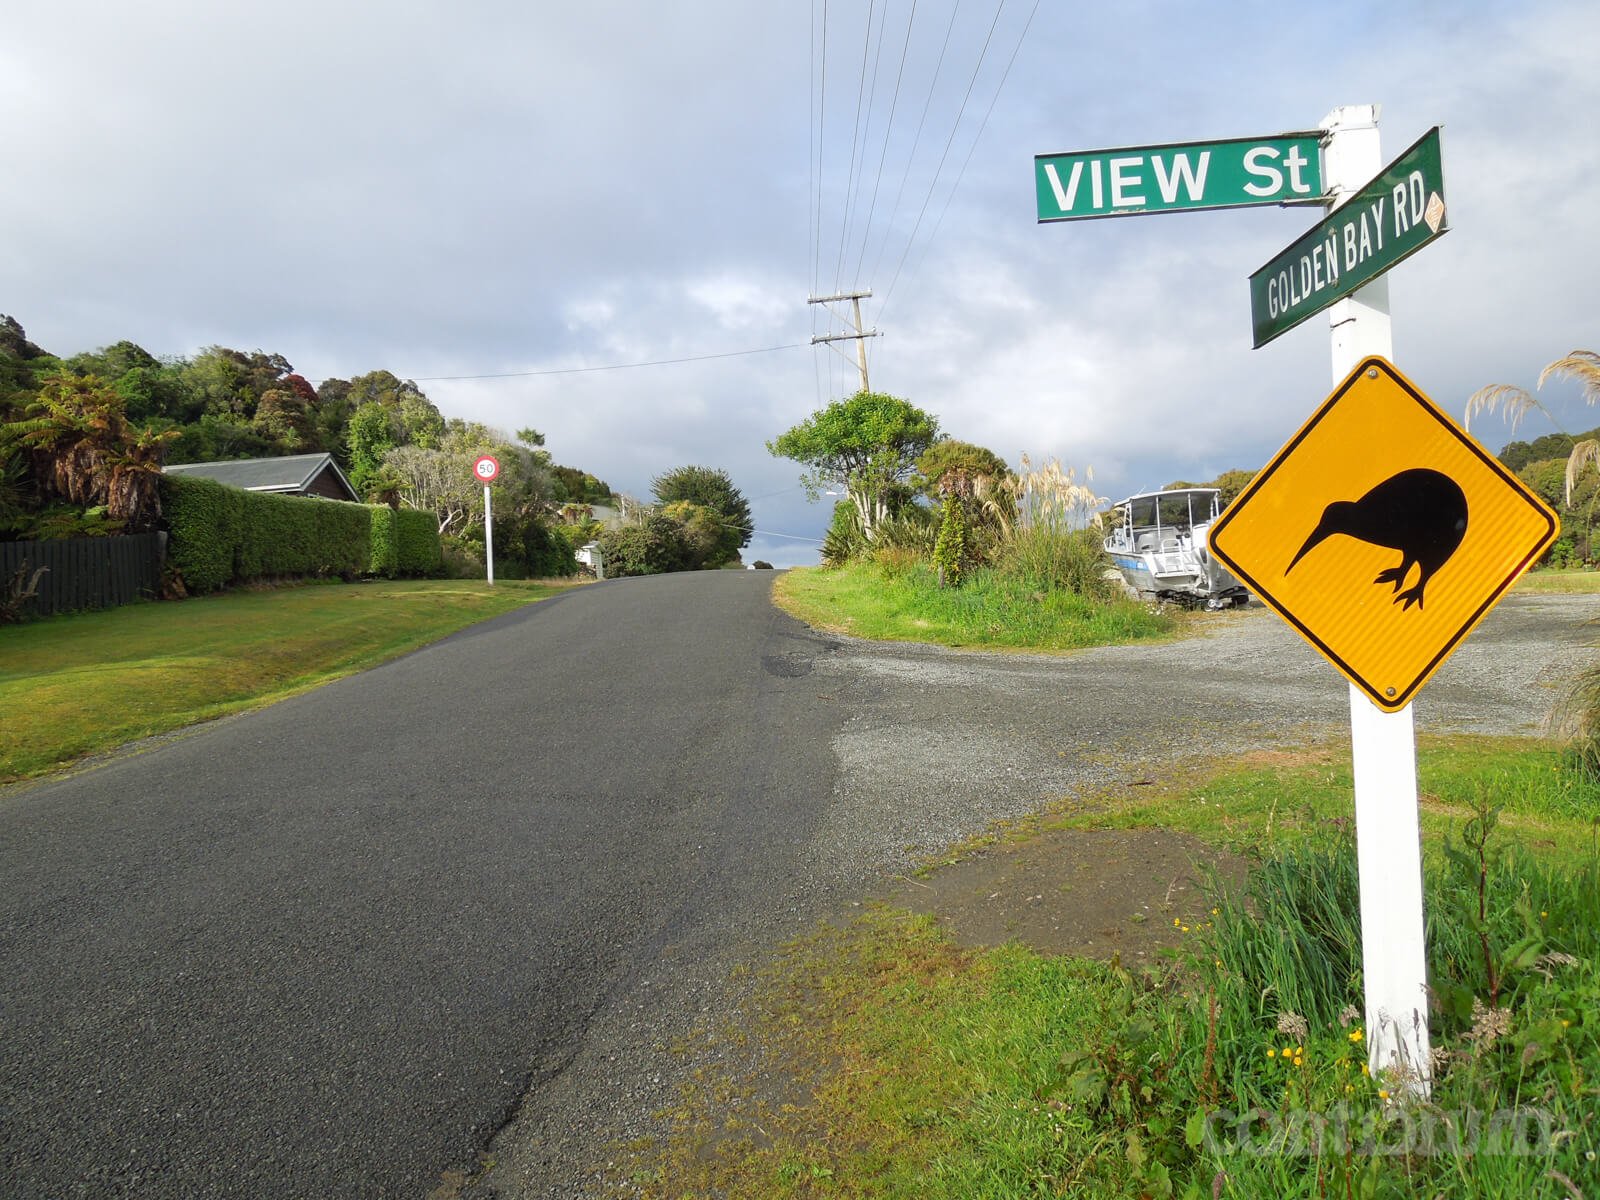 'Beware of Kiwi Birds' road sign in Oban, Stewart Island (Rakiura)